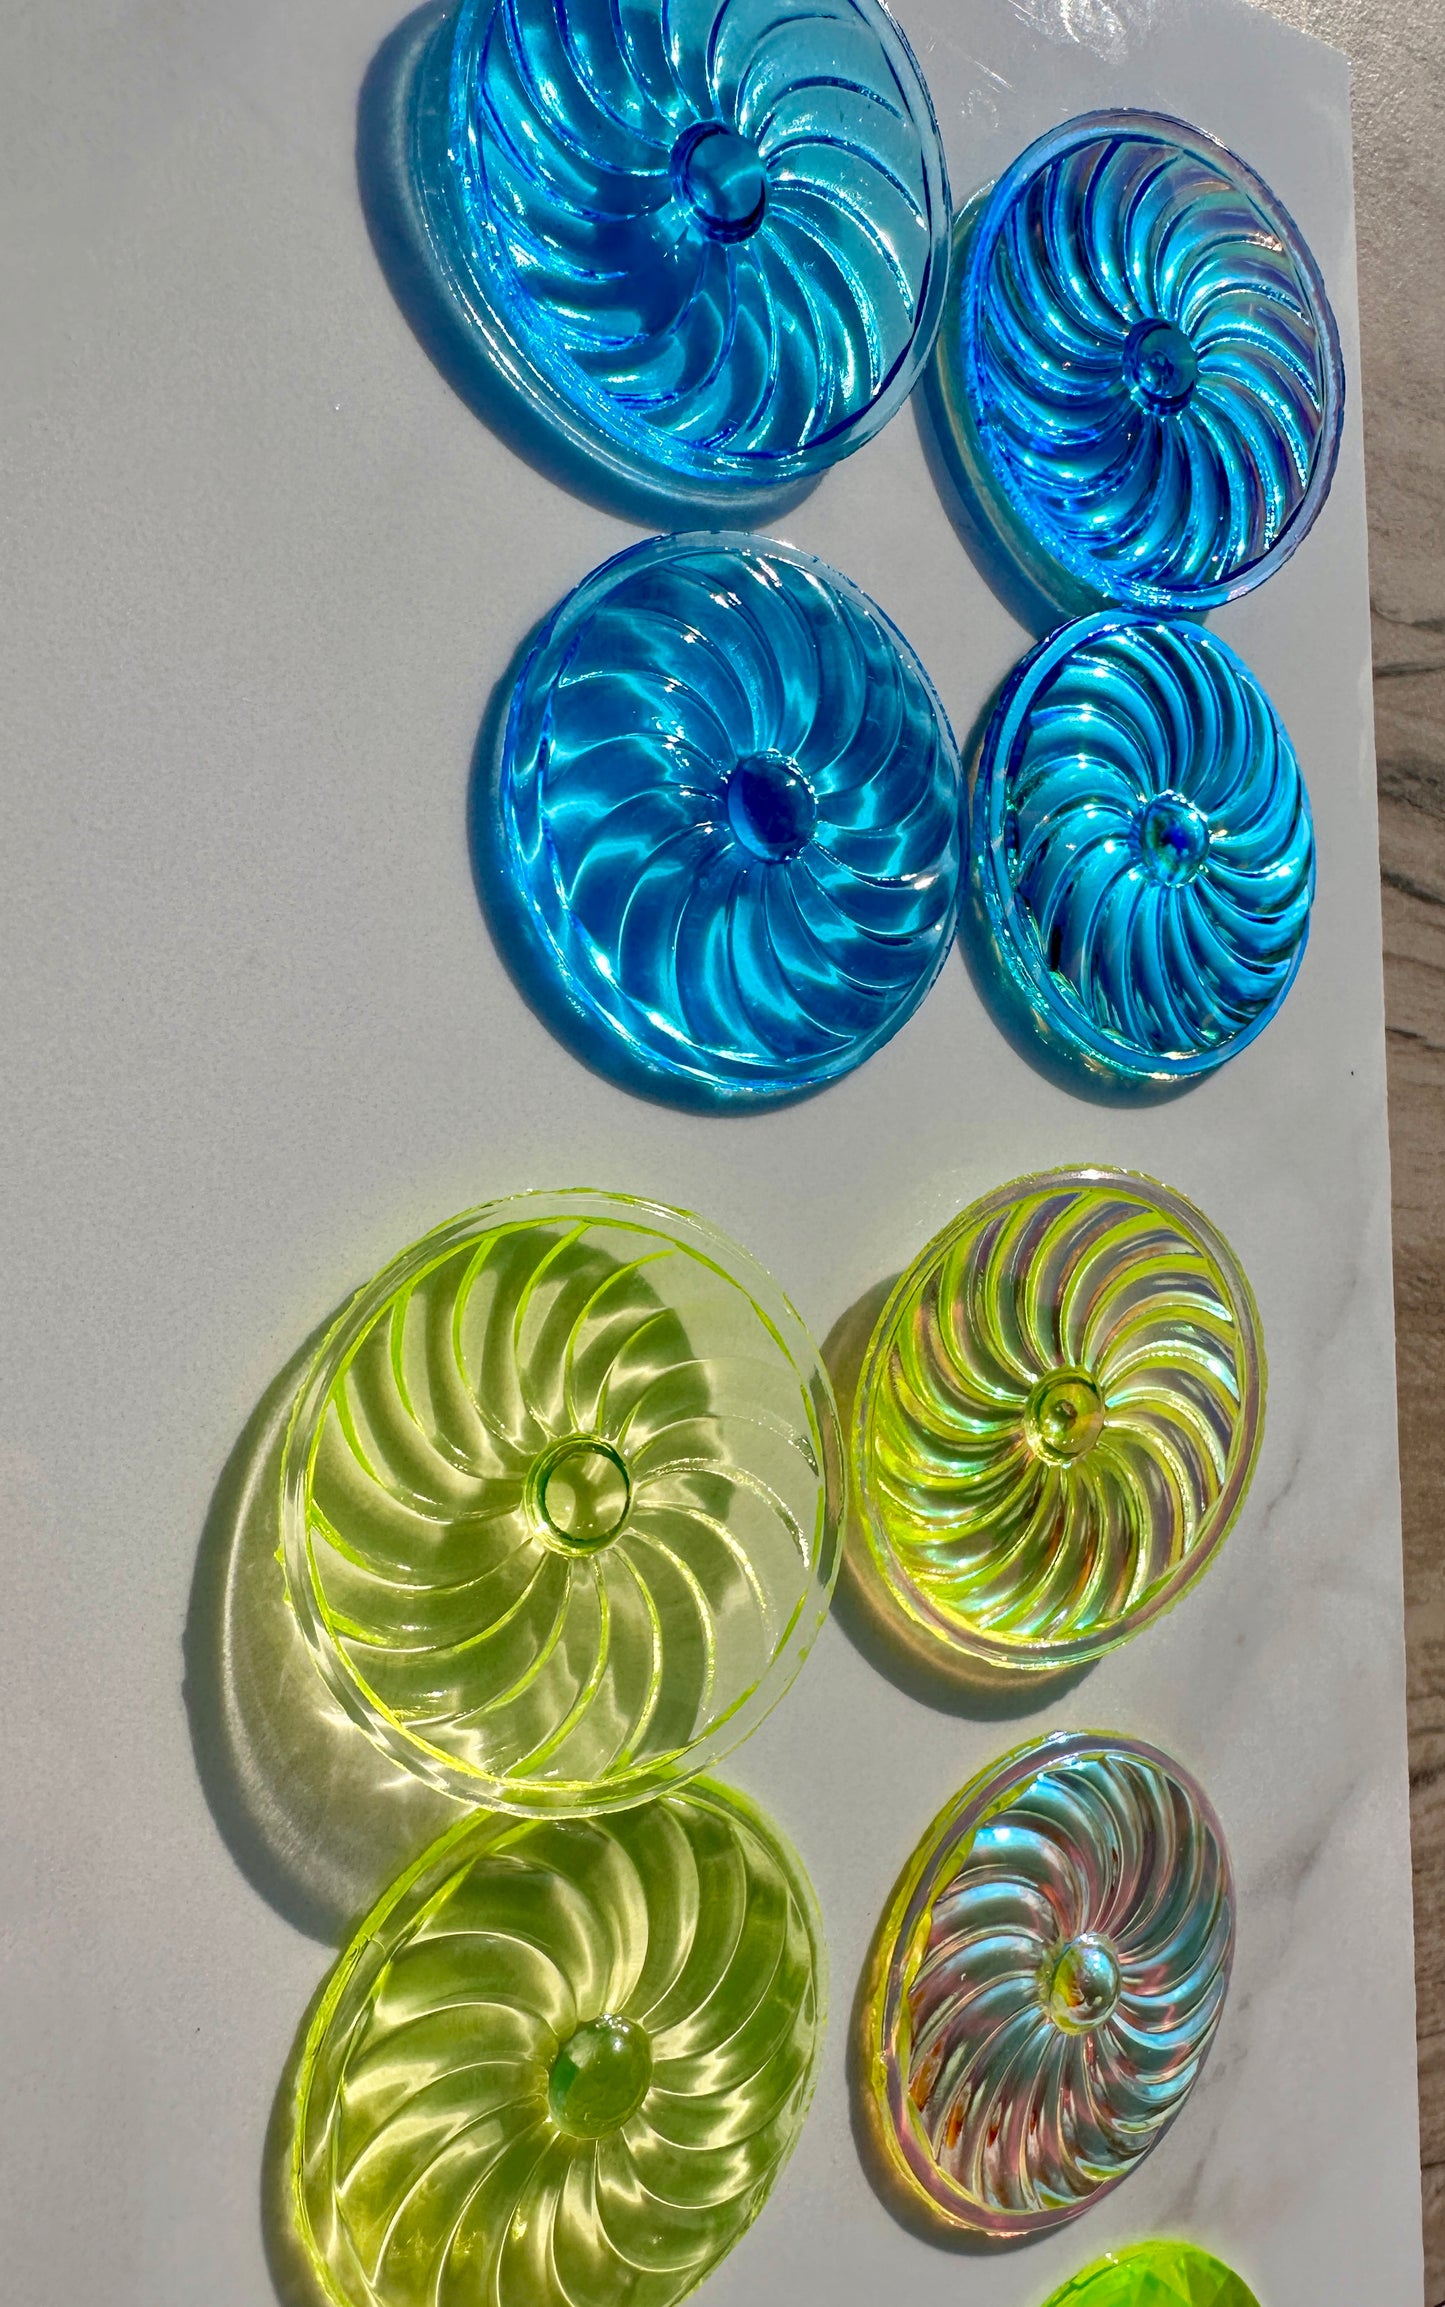 50mm Round Pinwheel in Uranium/Depression/Vaseline Glass Jewel - UV Reactive - Glows Under Blacklight